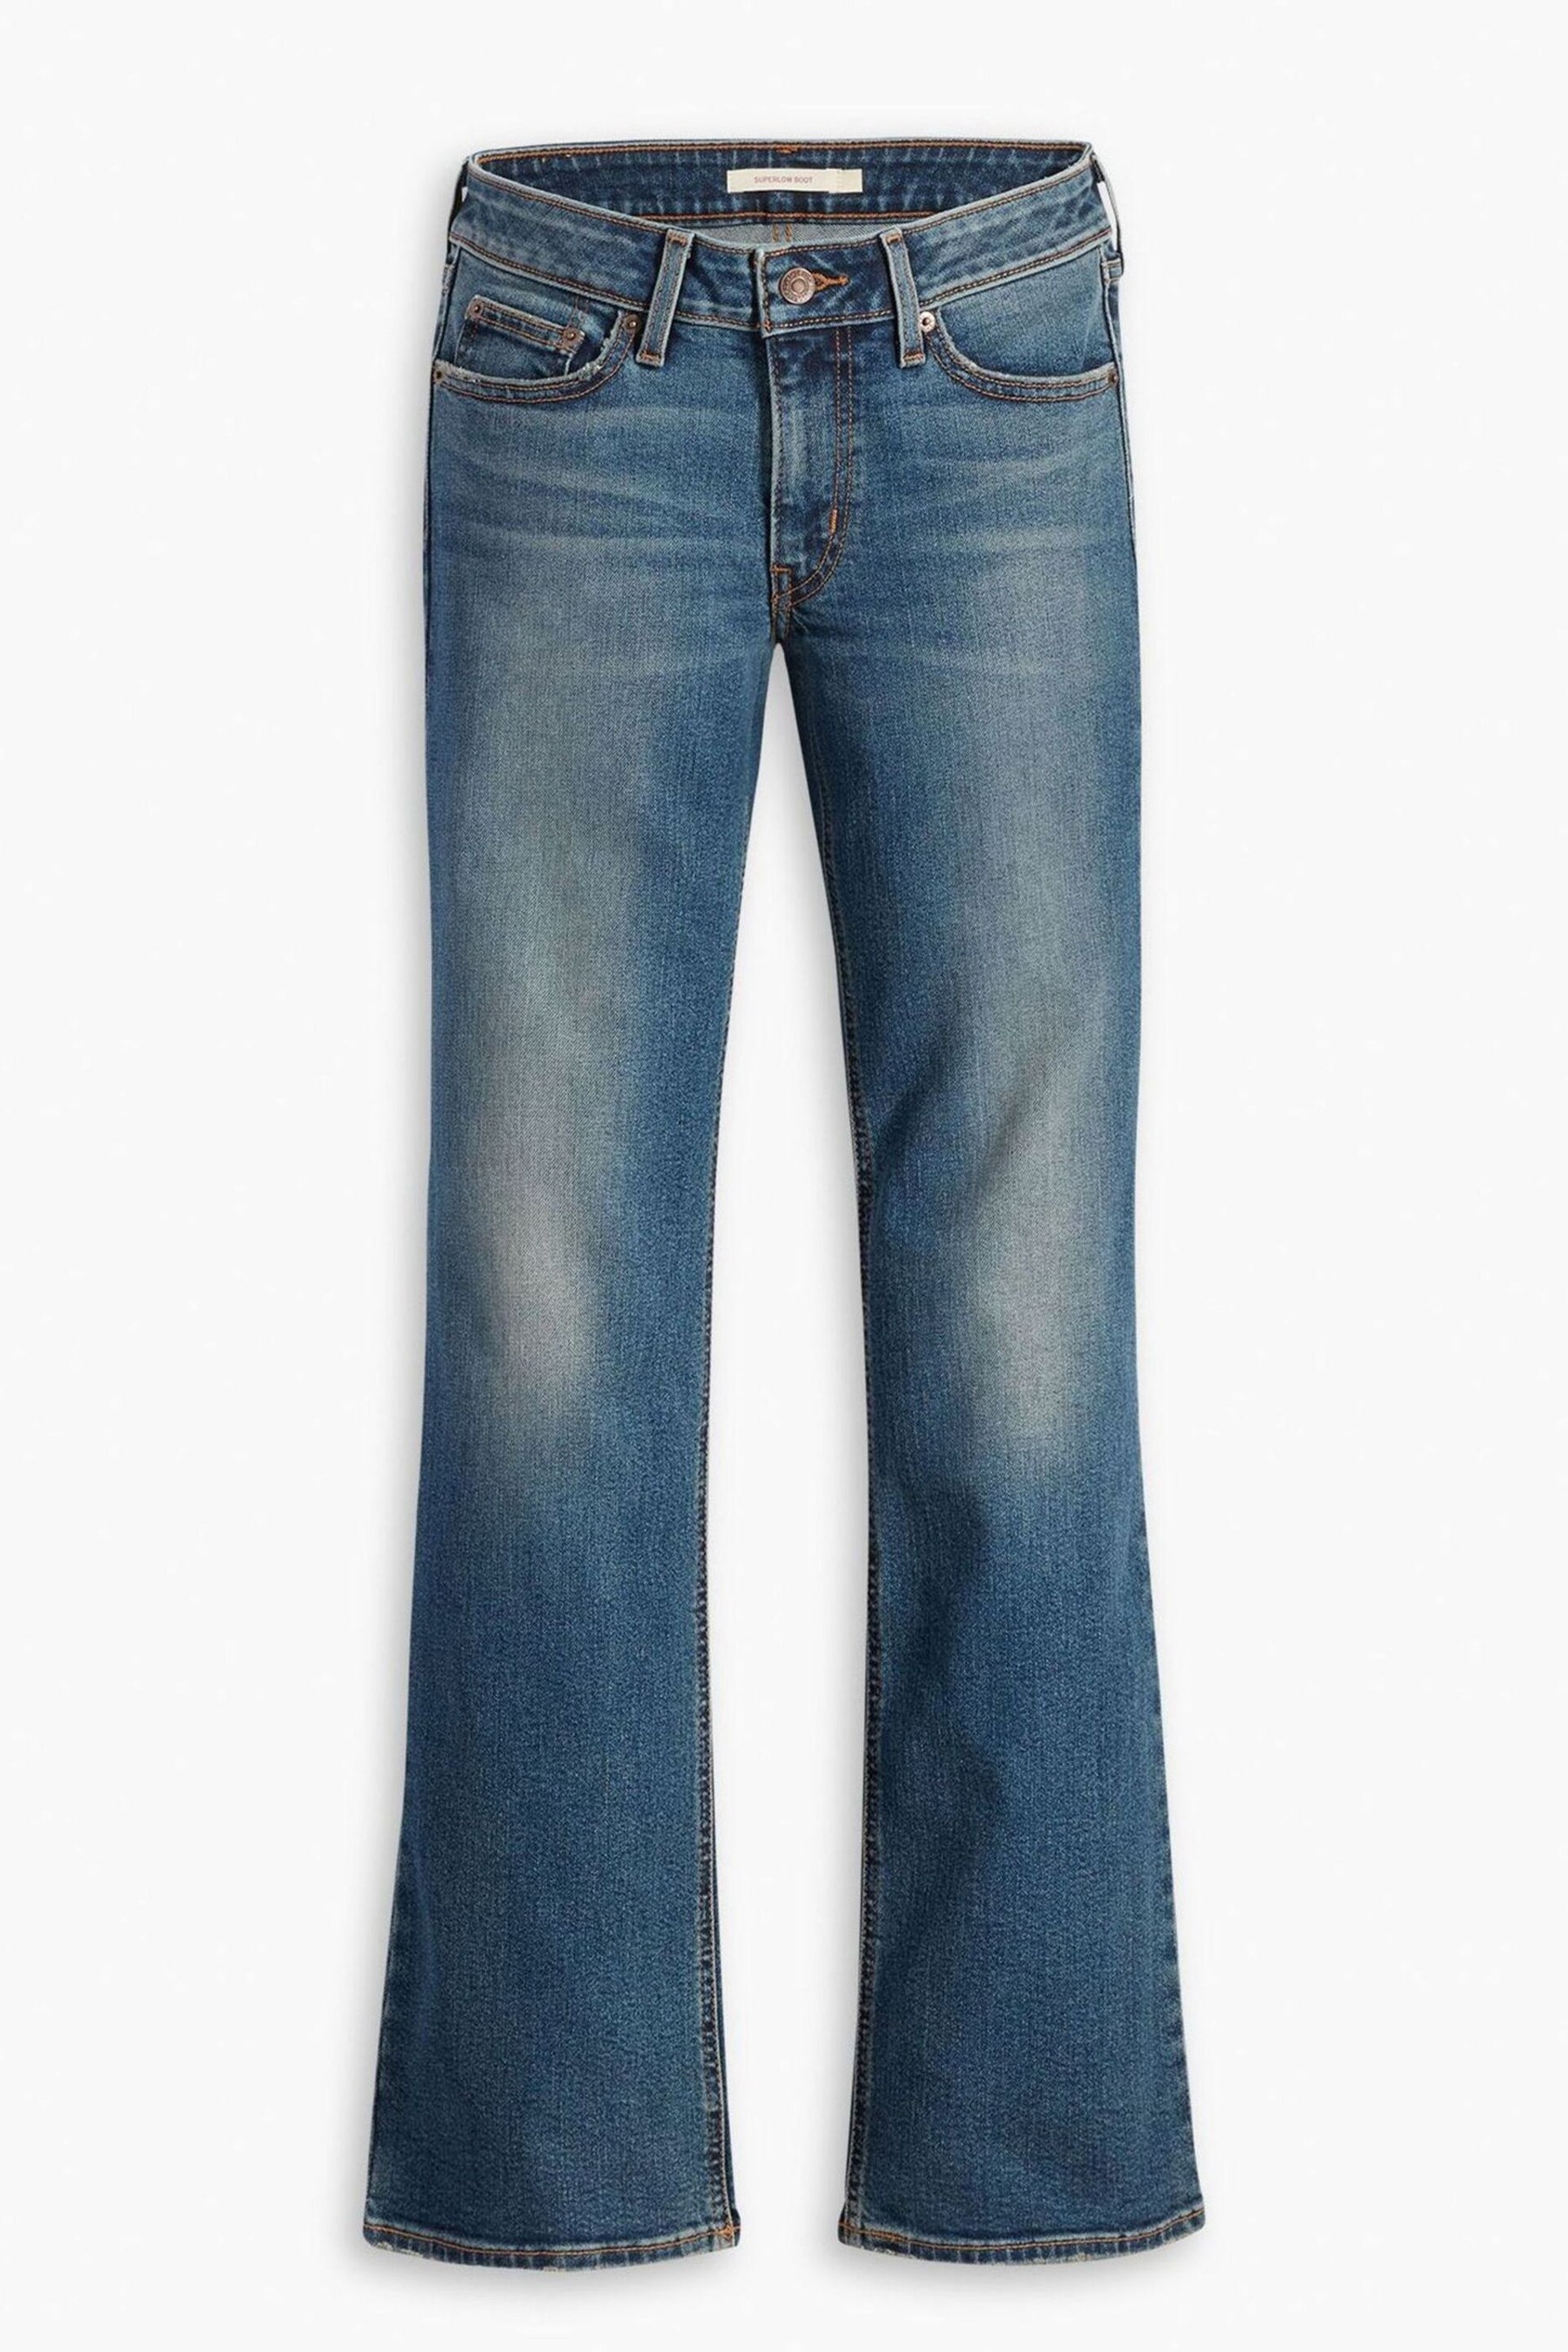 Levi's® Dark Blue Super Low Bootcut Jeans - Image 4 of 4